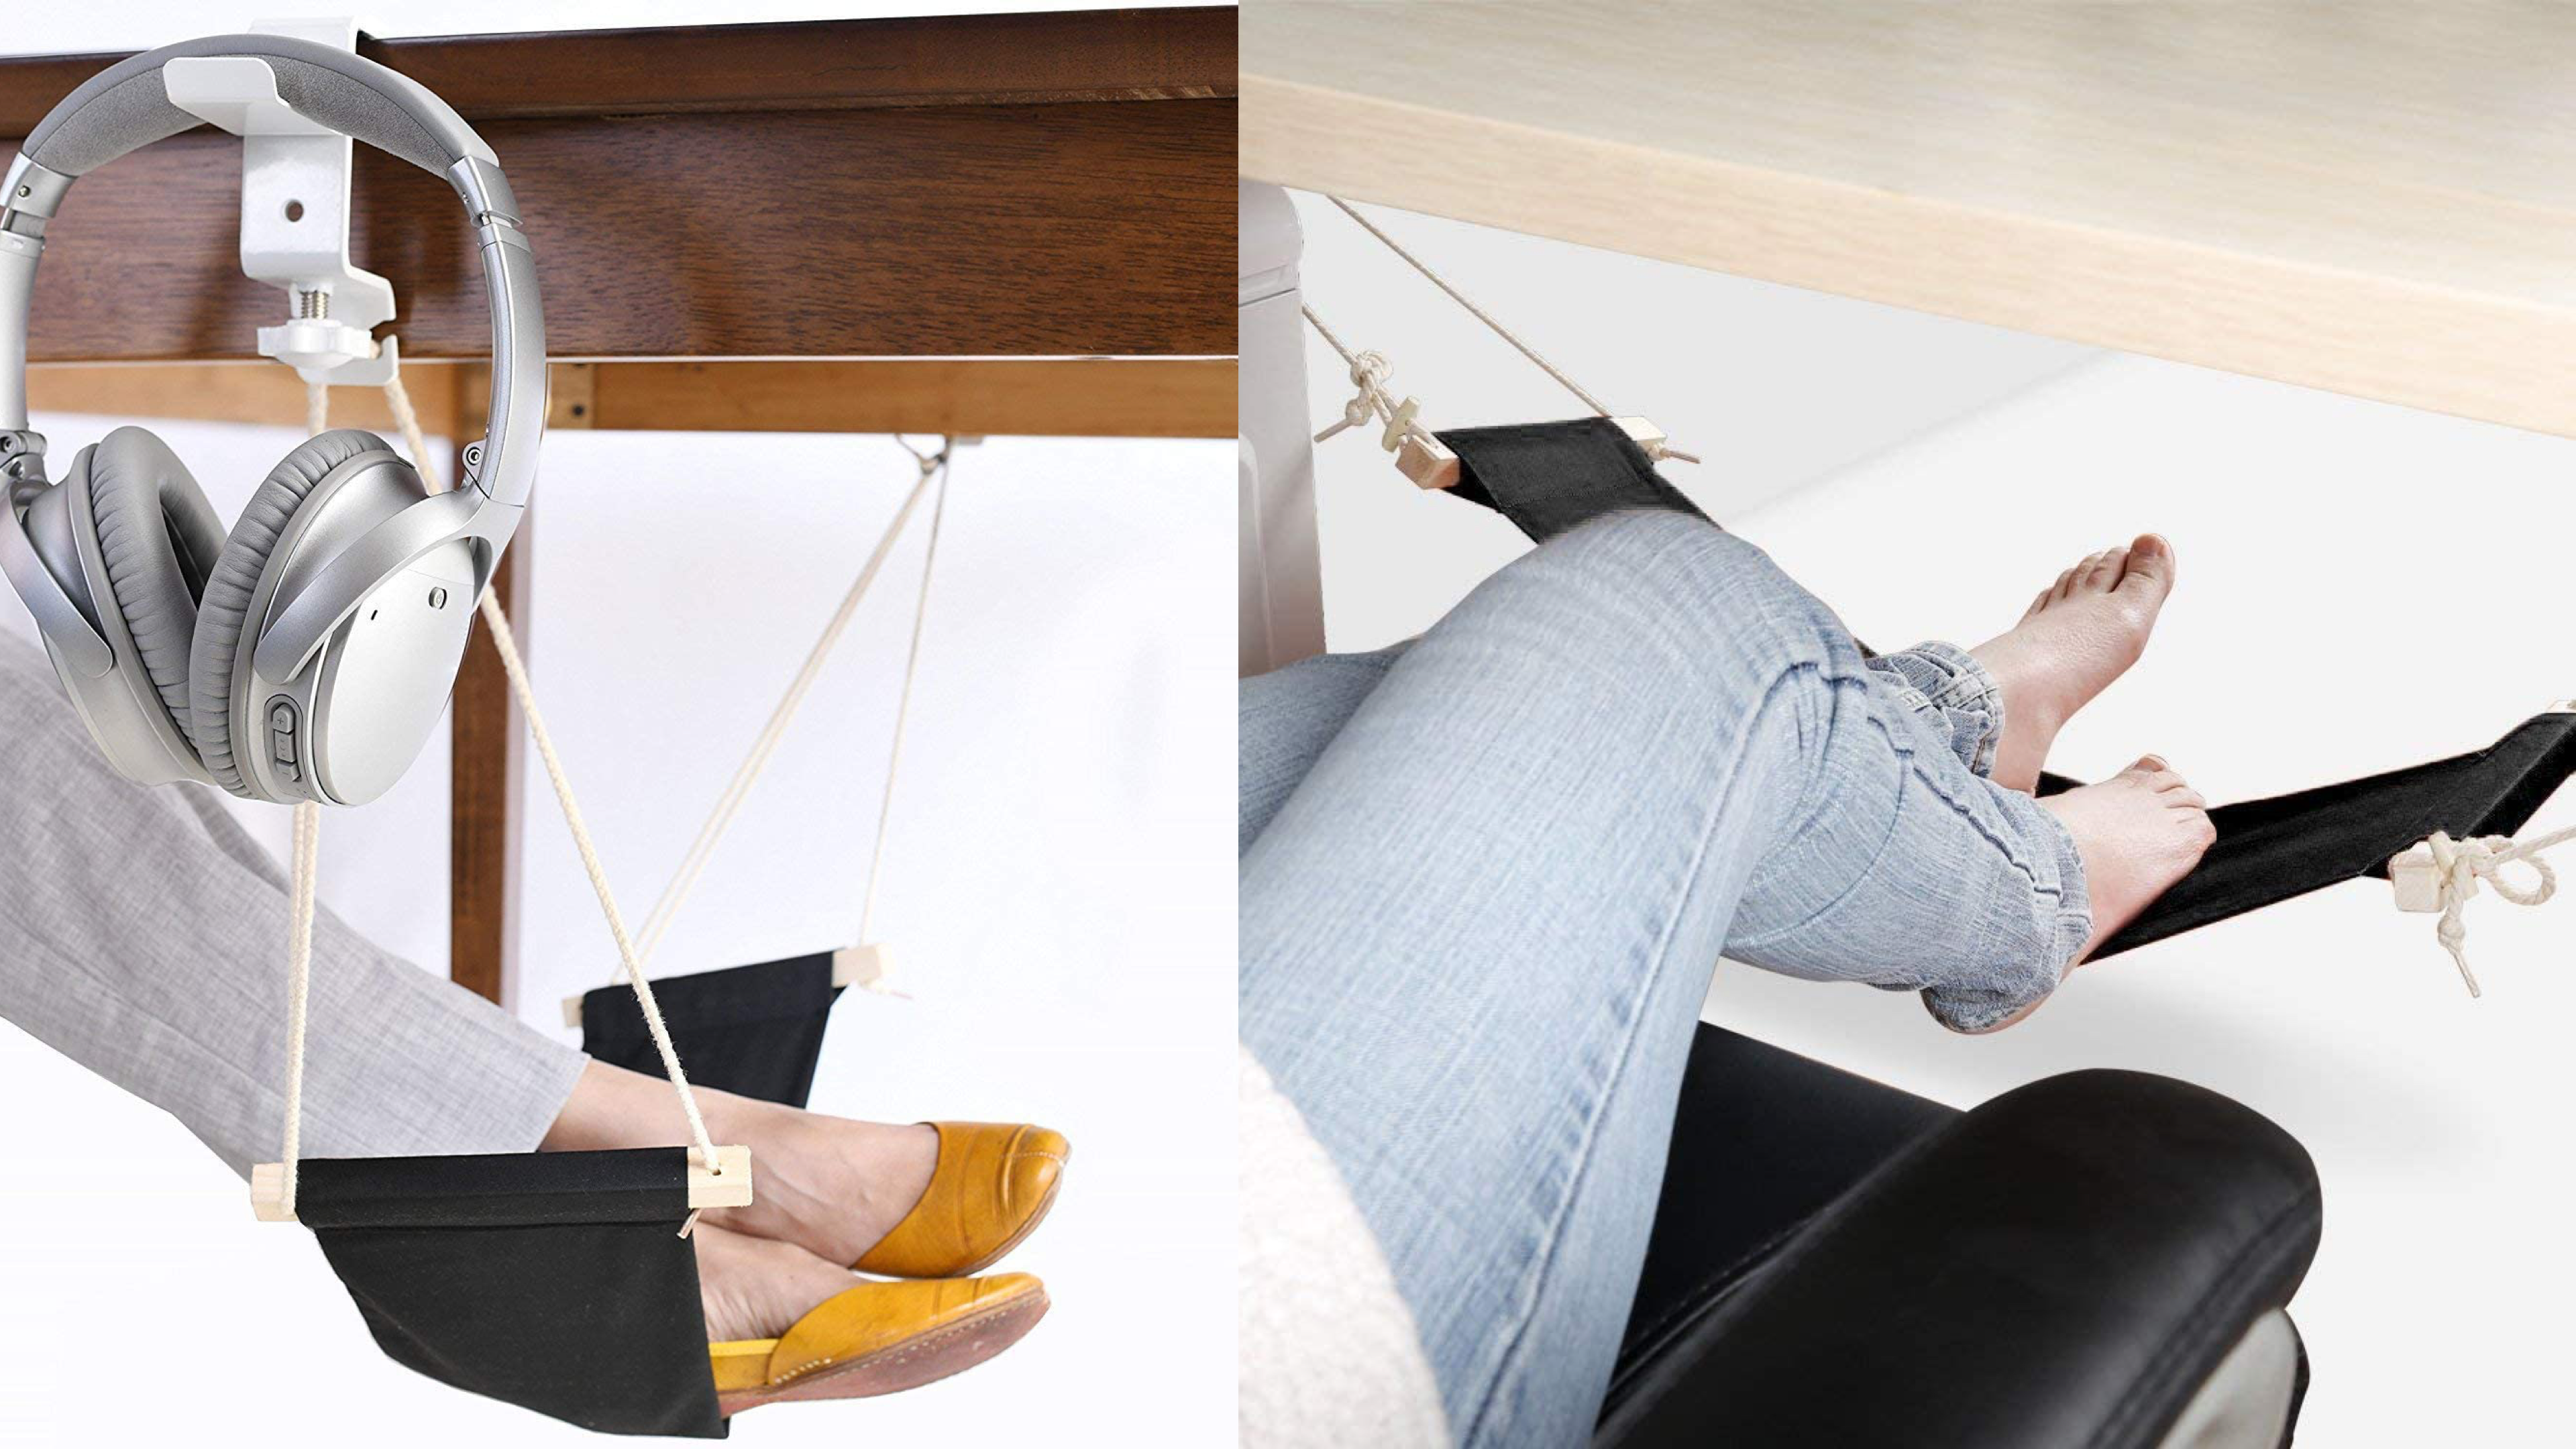 hammock for your feet underneath your desk